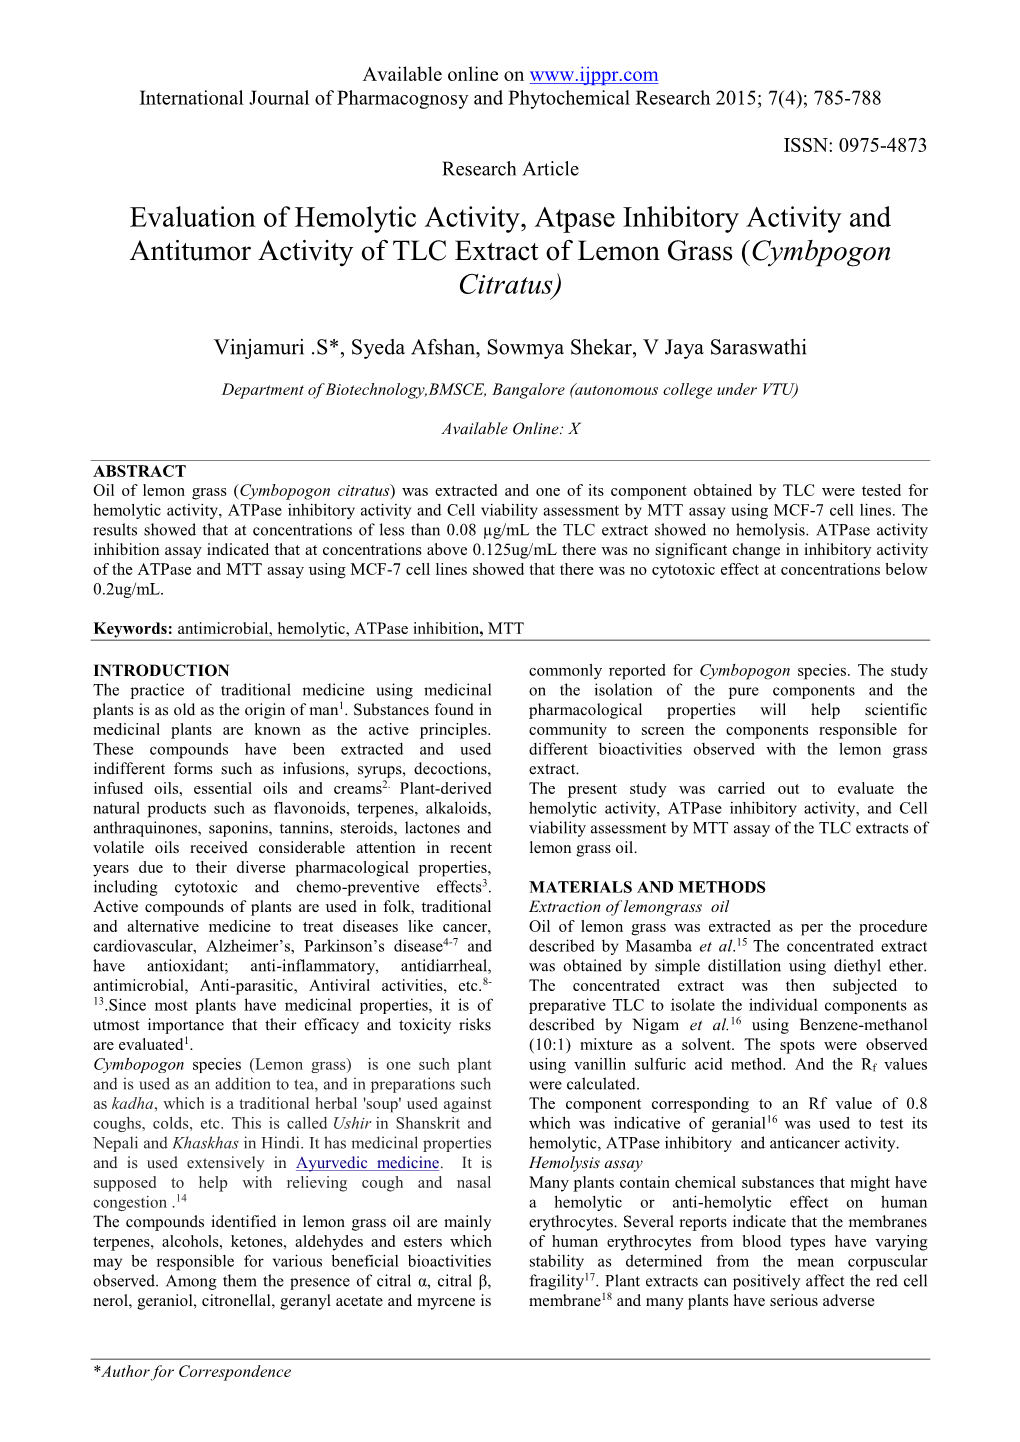 Evaluation of Hemolytic Activity, Atpase Inhibitory Activity and Antitumor Activity of TLC Extract of Lemon Grass (Cymbpogon Citratus)